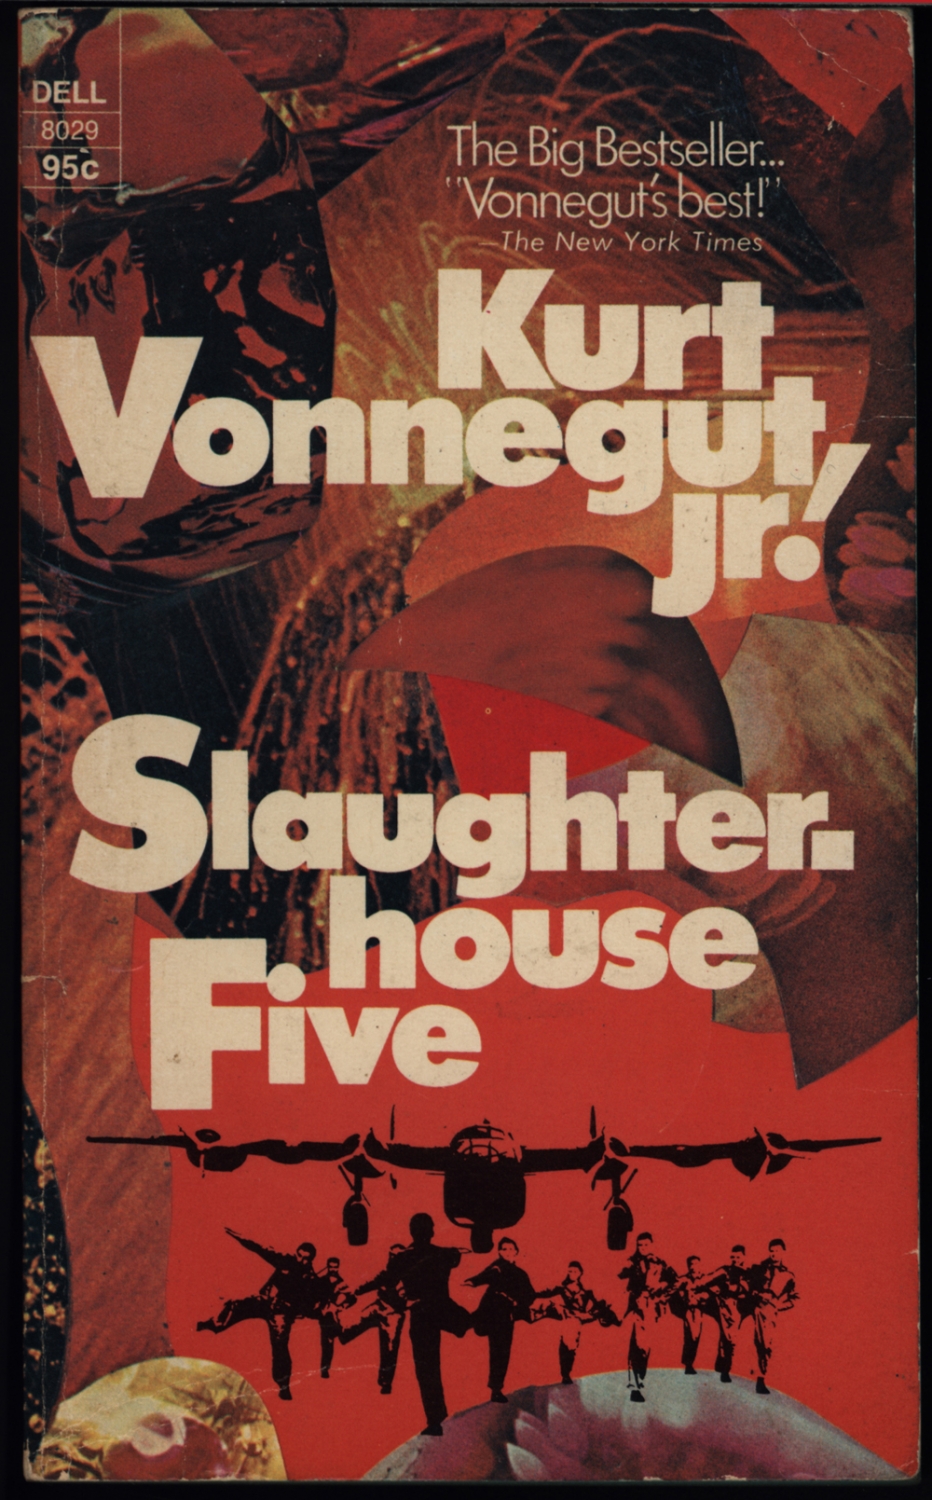 Essay on Kurt Vonnegut’s Slaughter-house Five